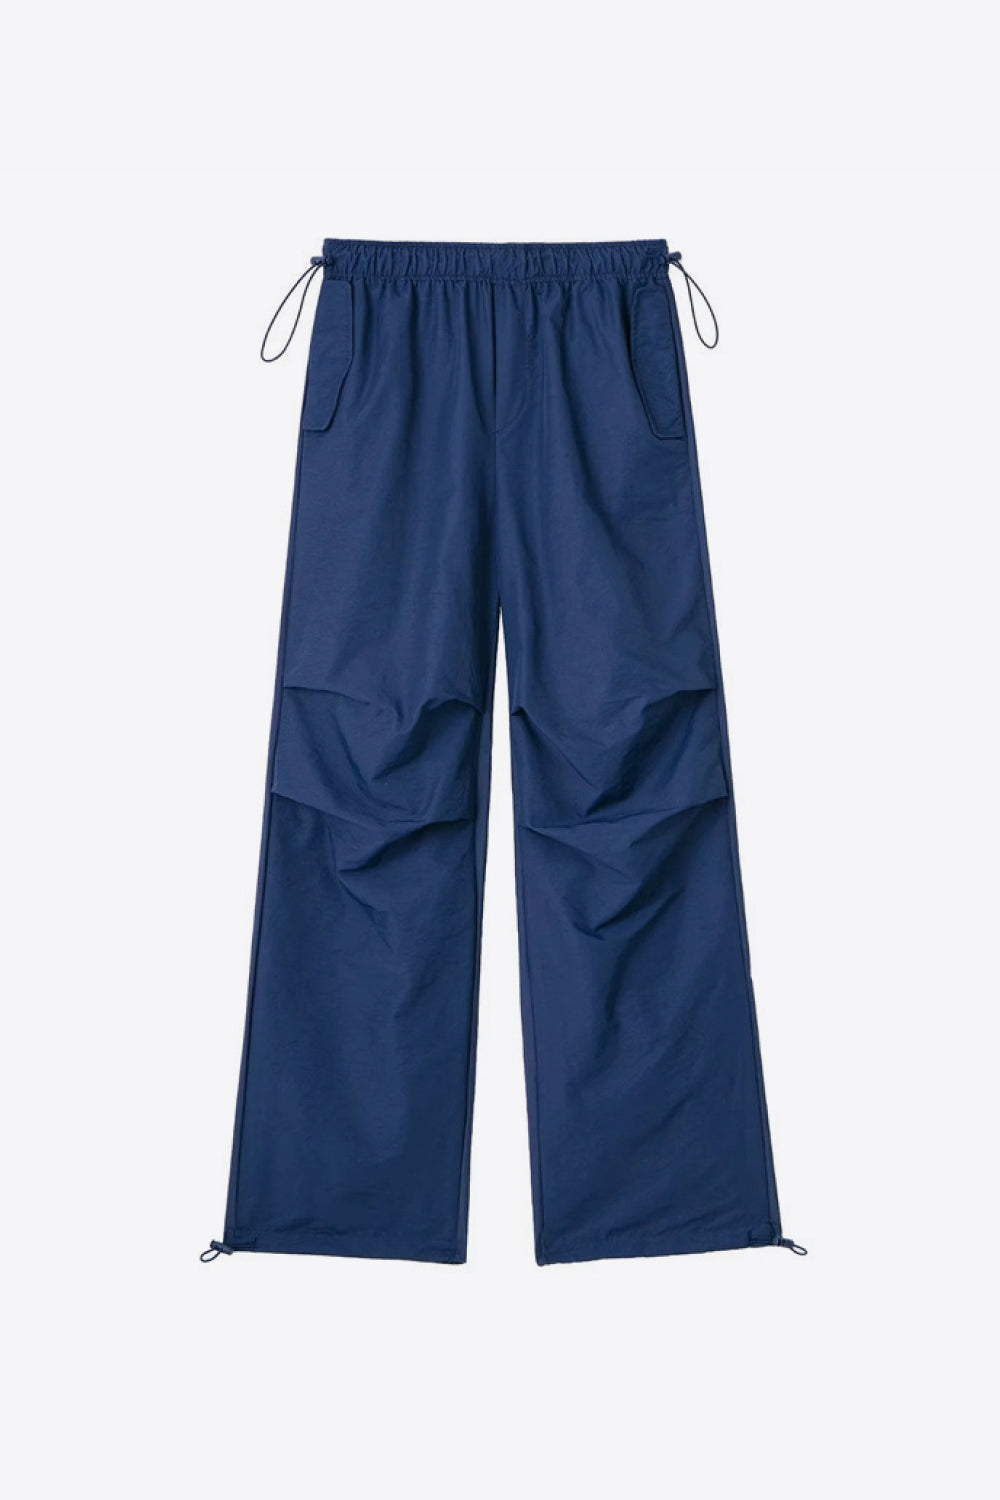 Drawstring Waist Pants with Pockets - Blue / XS - Bottoms - Pants - 10 - 2024